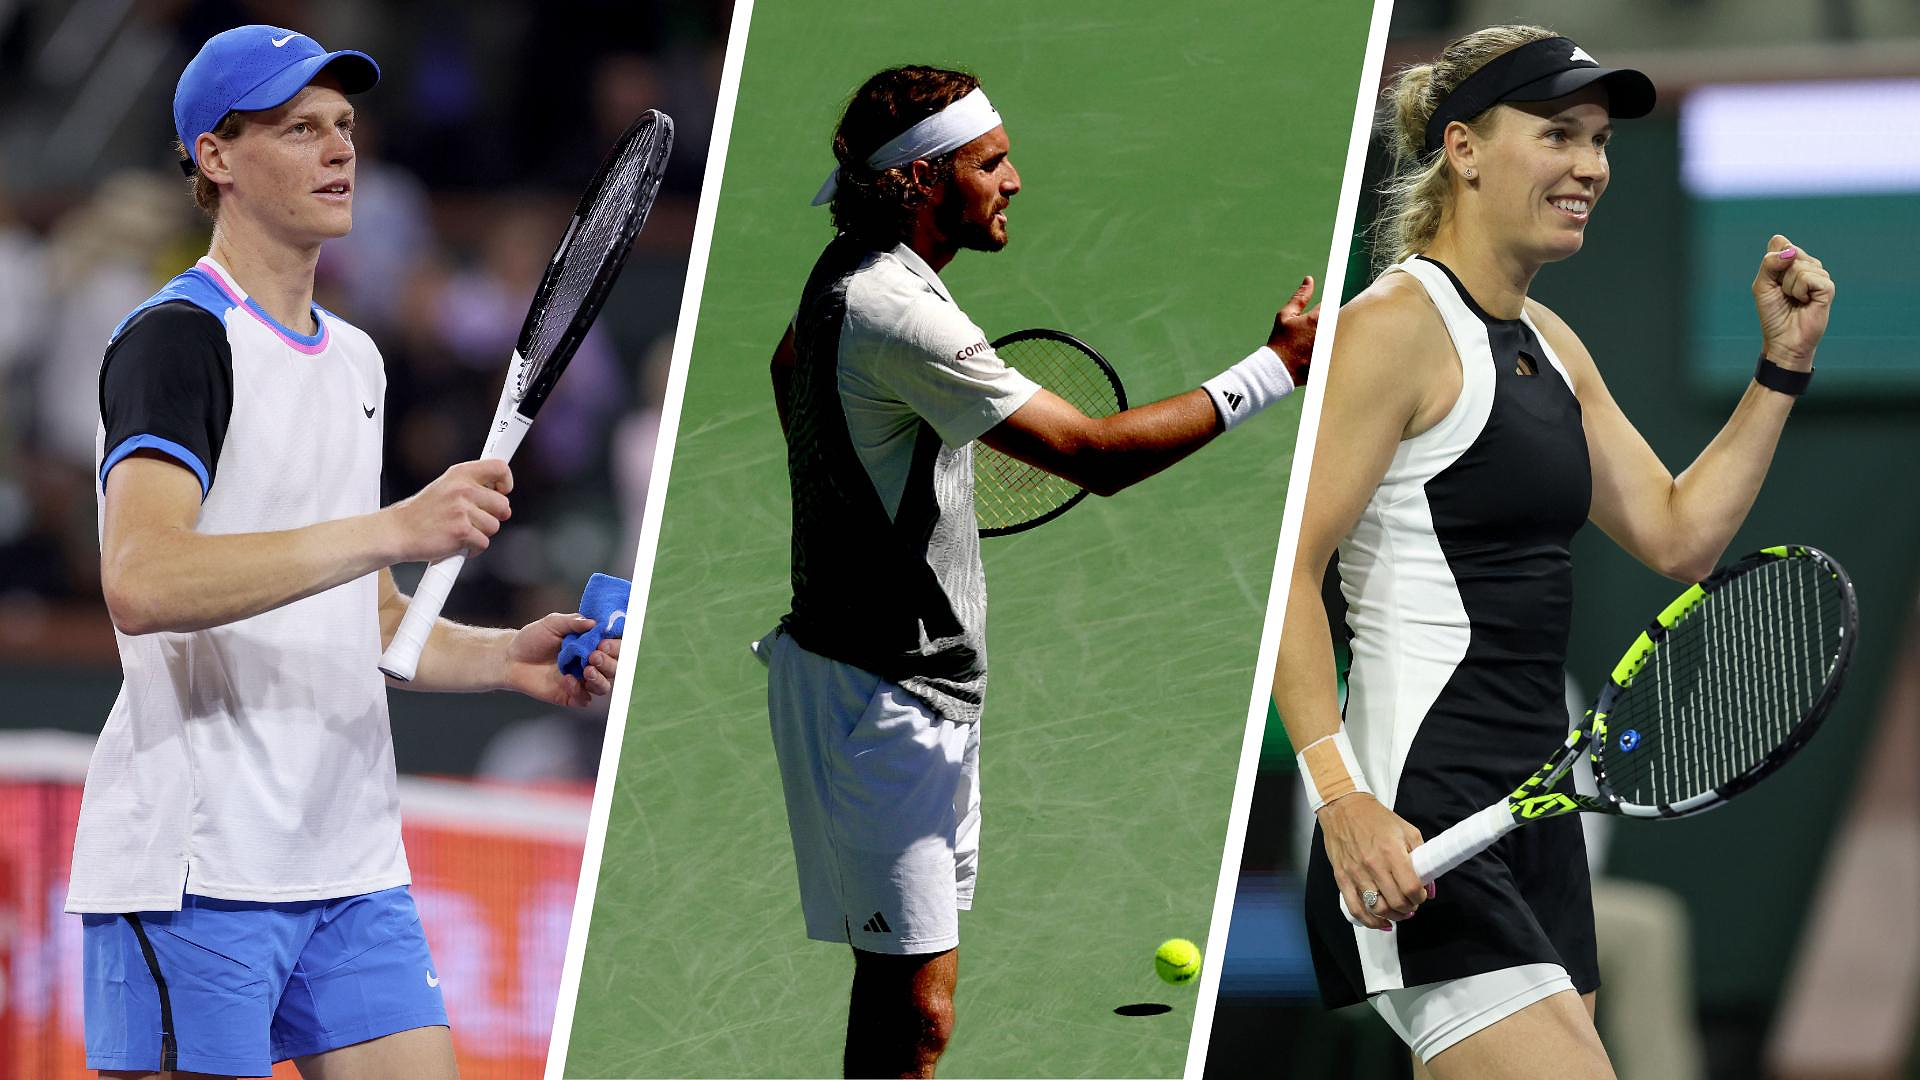 Tennis: Sinner ensures while Tsitsipas thwarts, Wozniacki finds success at Indian Wells